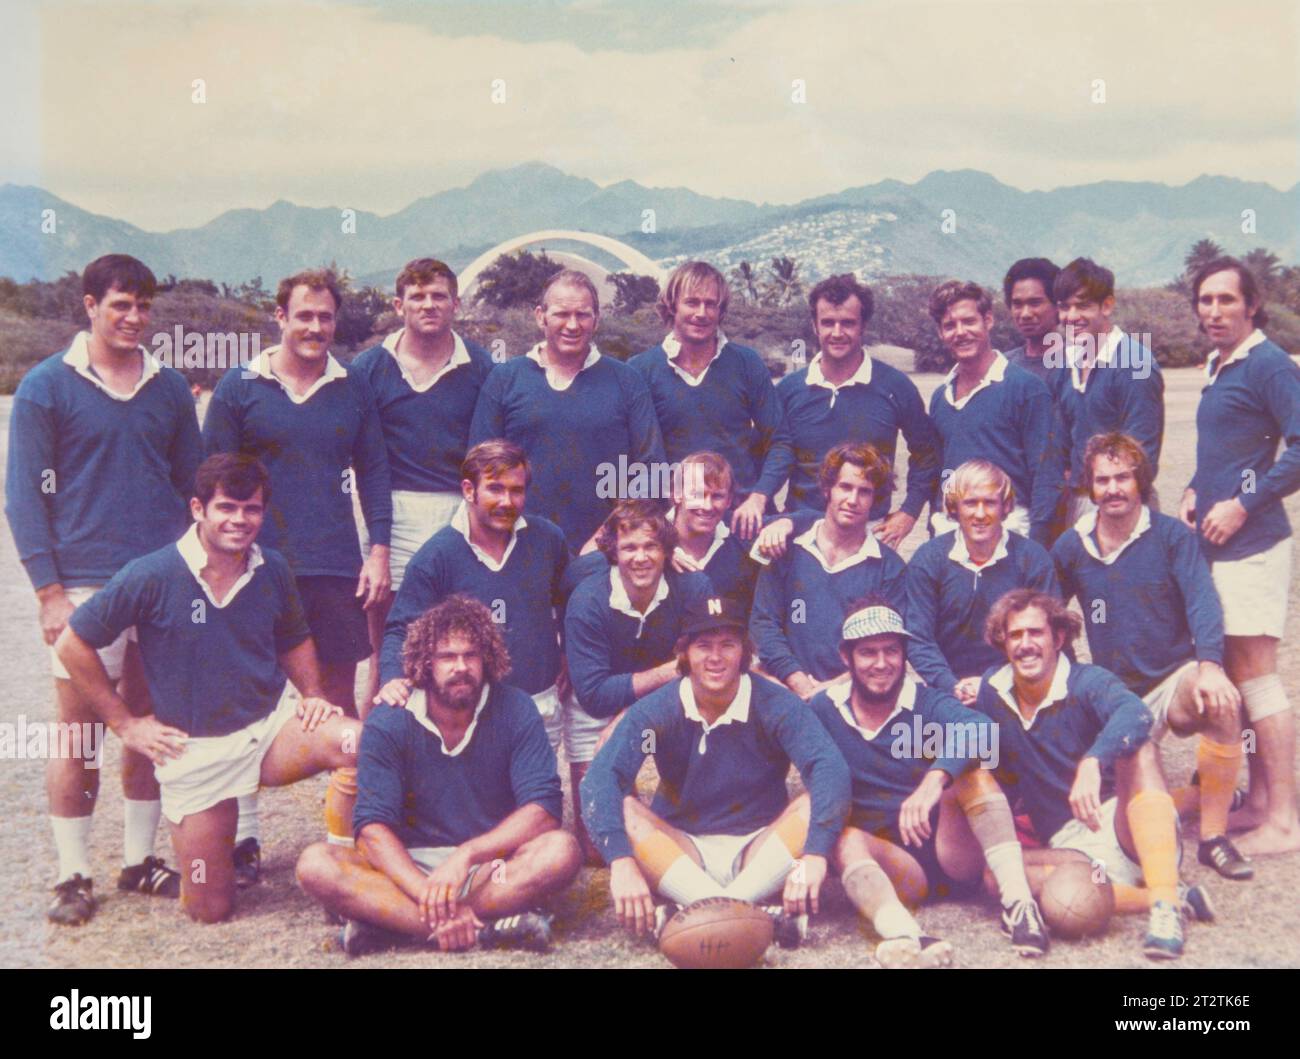 1972 team photo of the Hawaiian harlequin rugby club in Honolulu Hawaii, USA Stock Photo